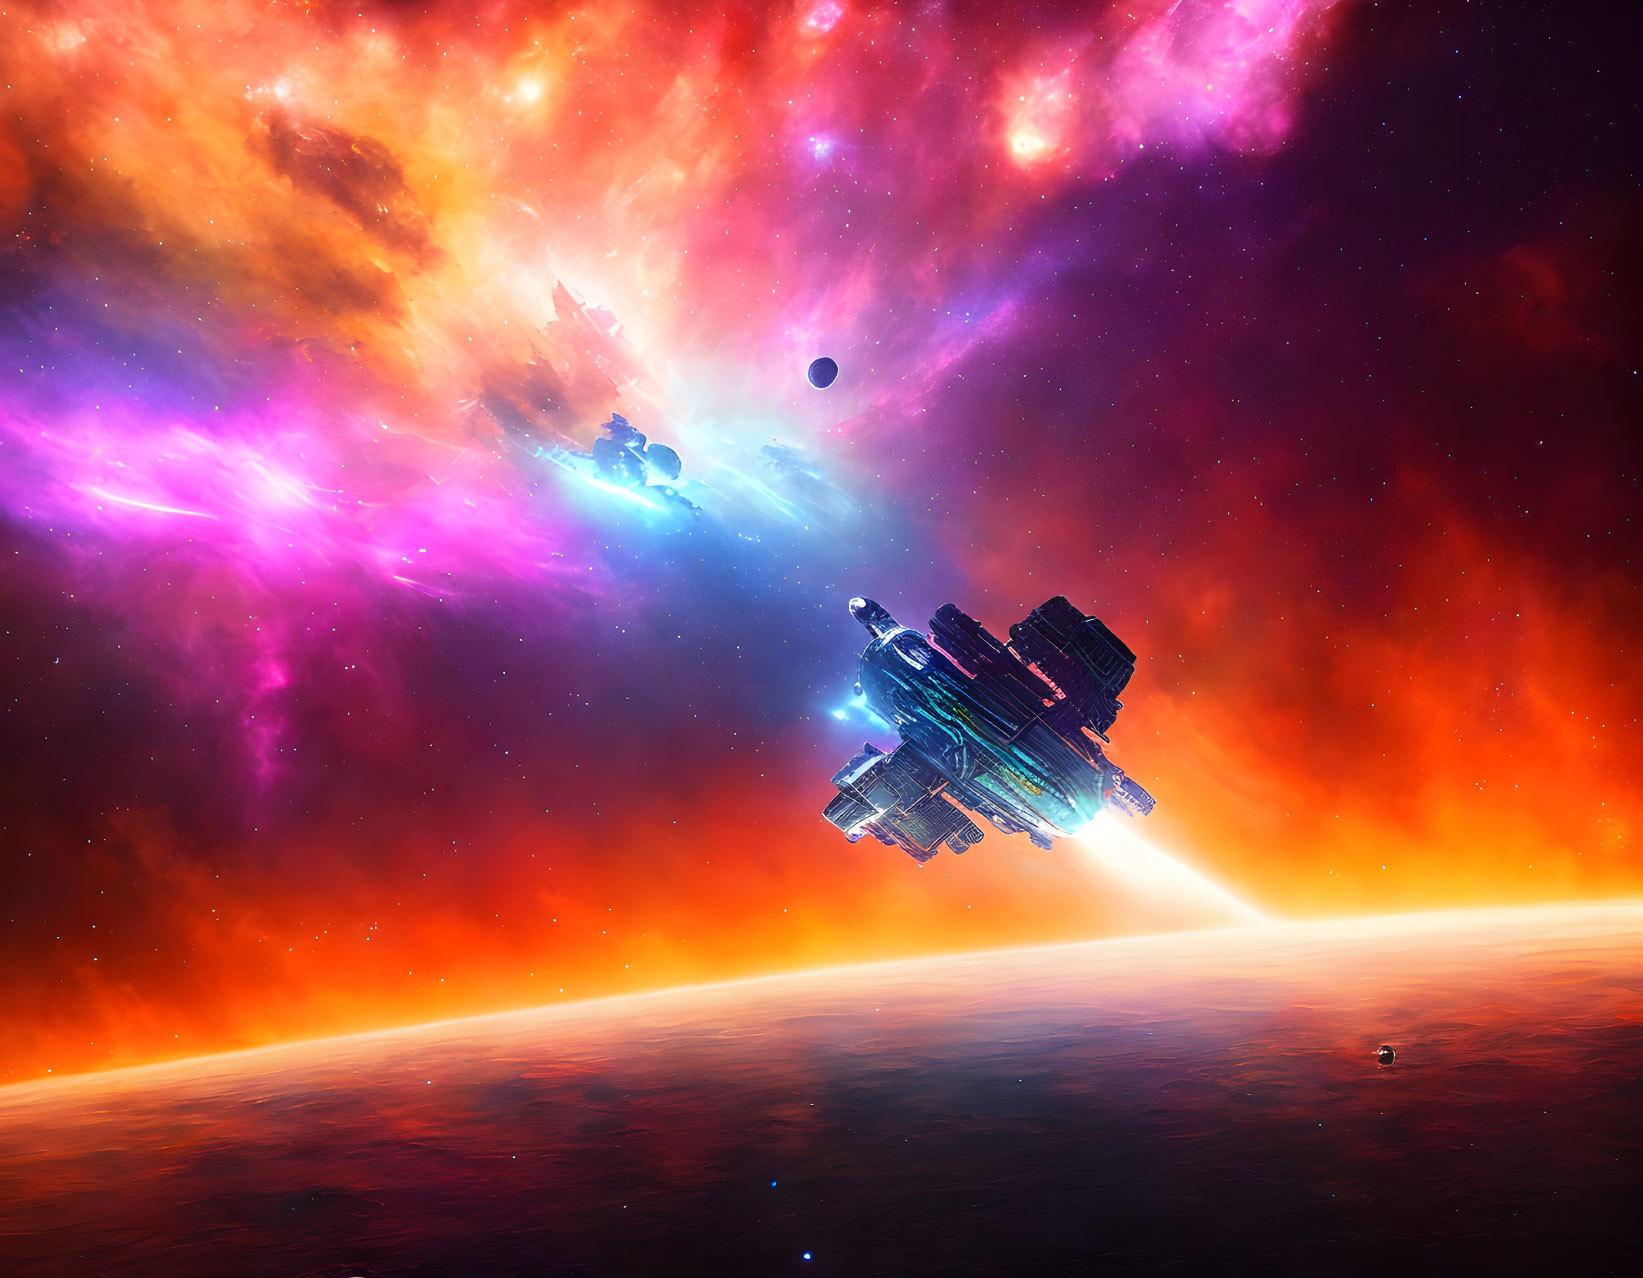 Colorful Space Scene with Futuristic Spaceship & Nebulae